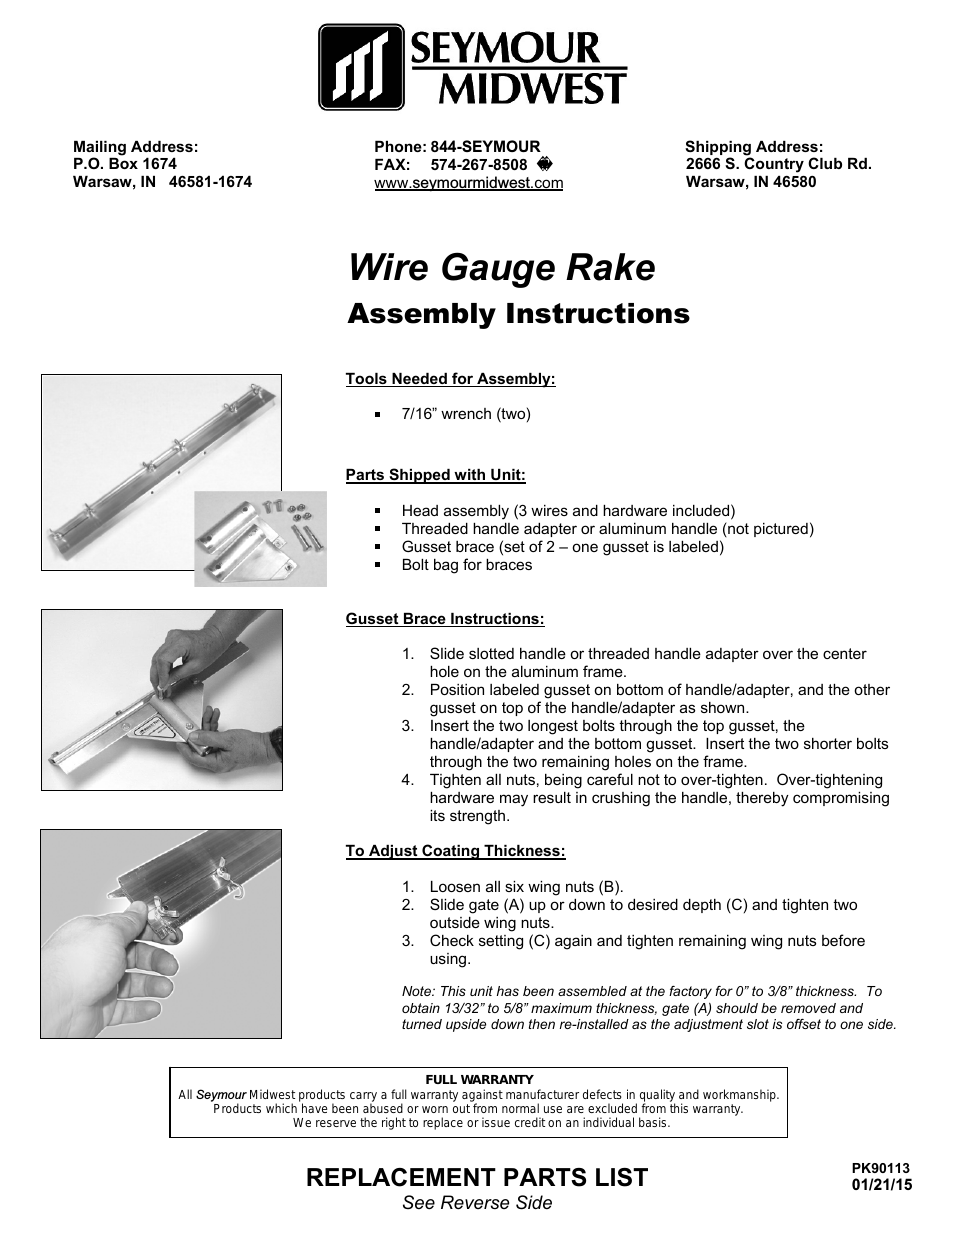 Wire Gauge Rake(PK90113)